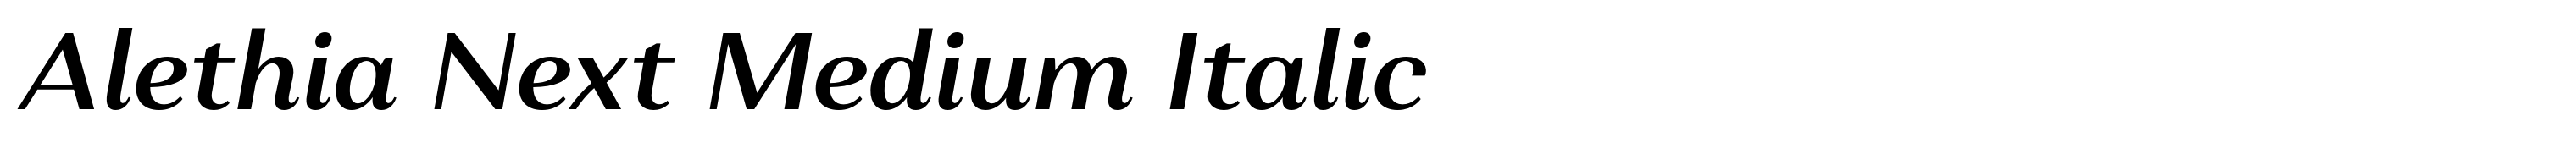 Alethia Next Medium Italic